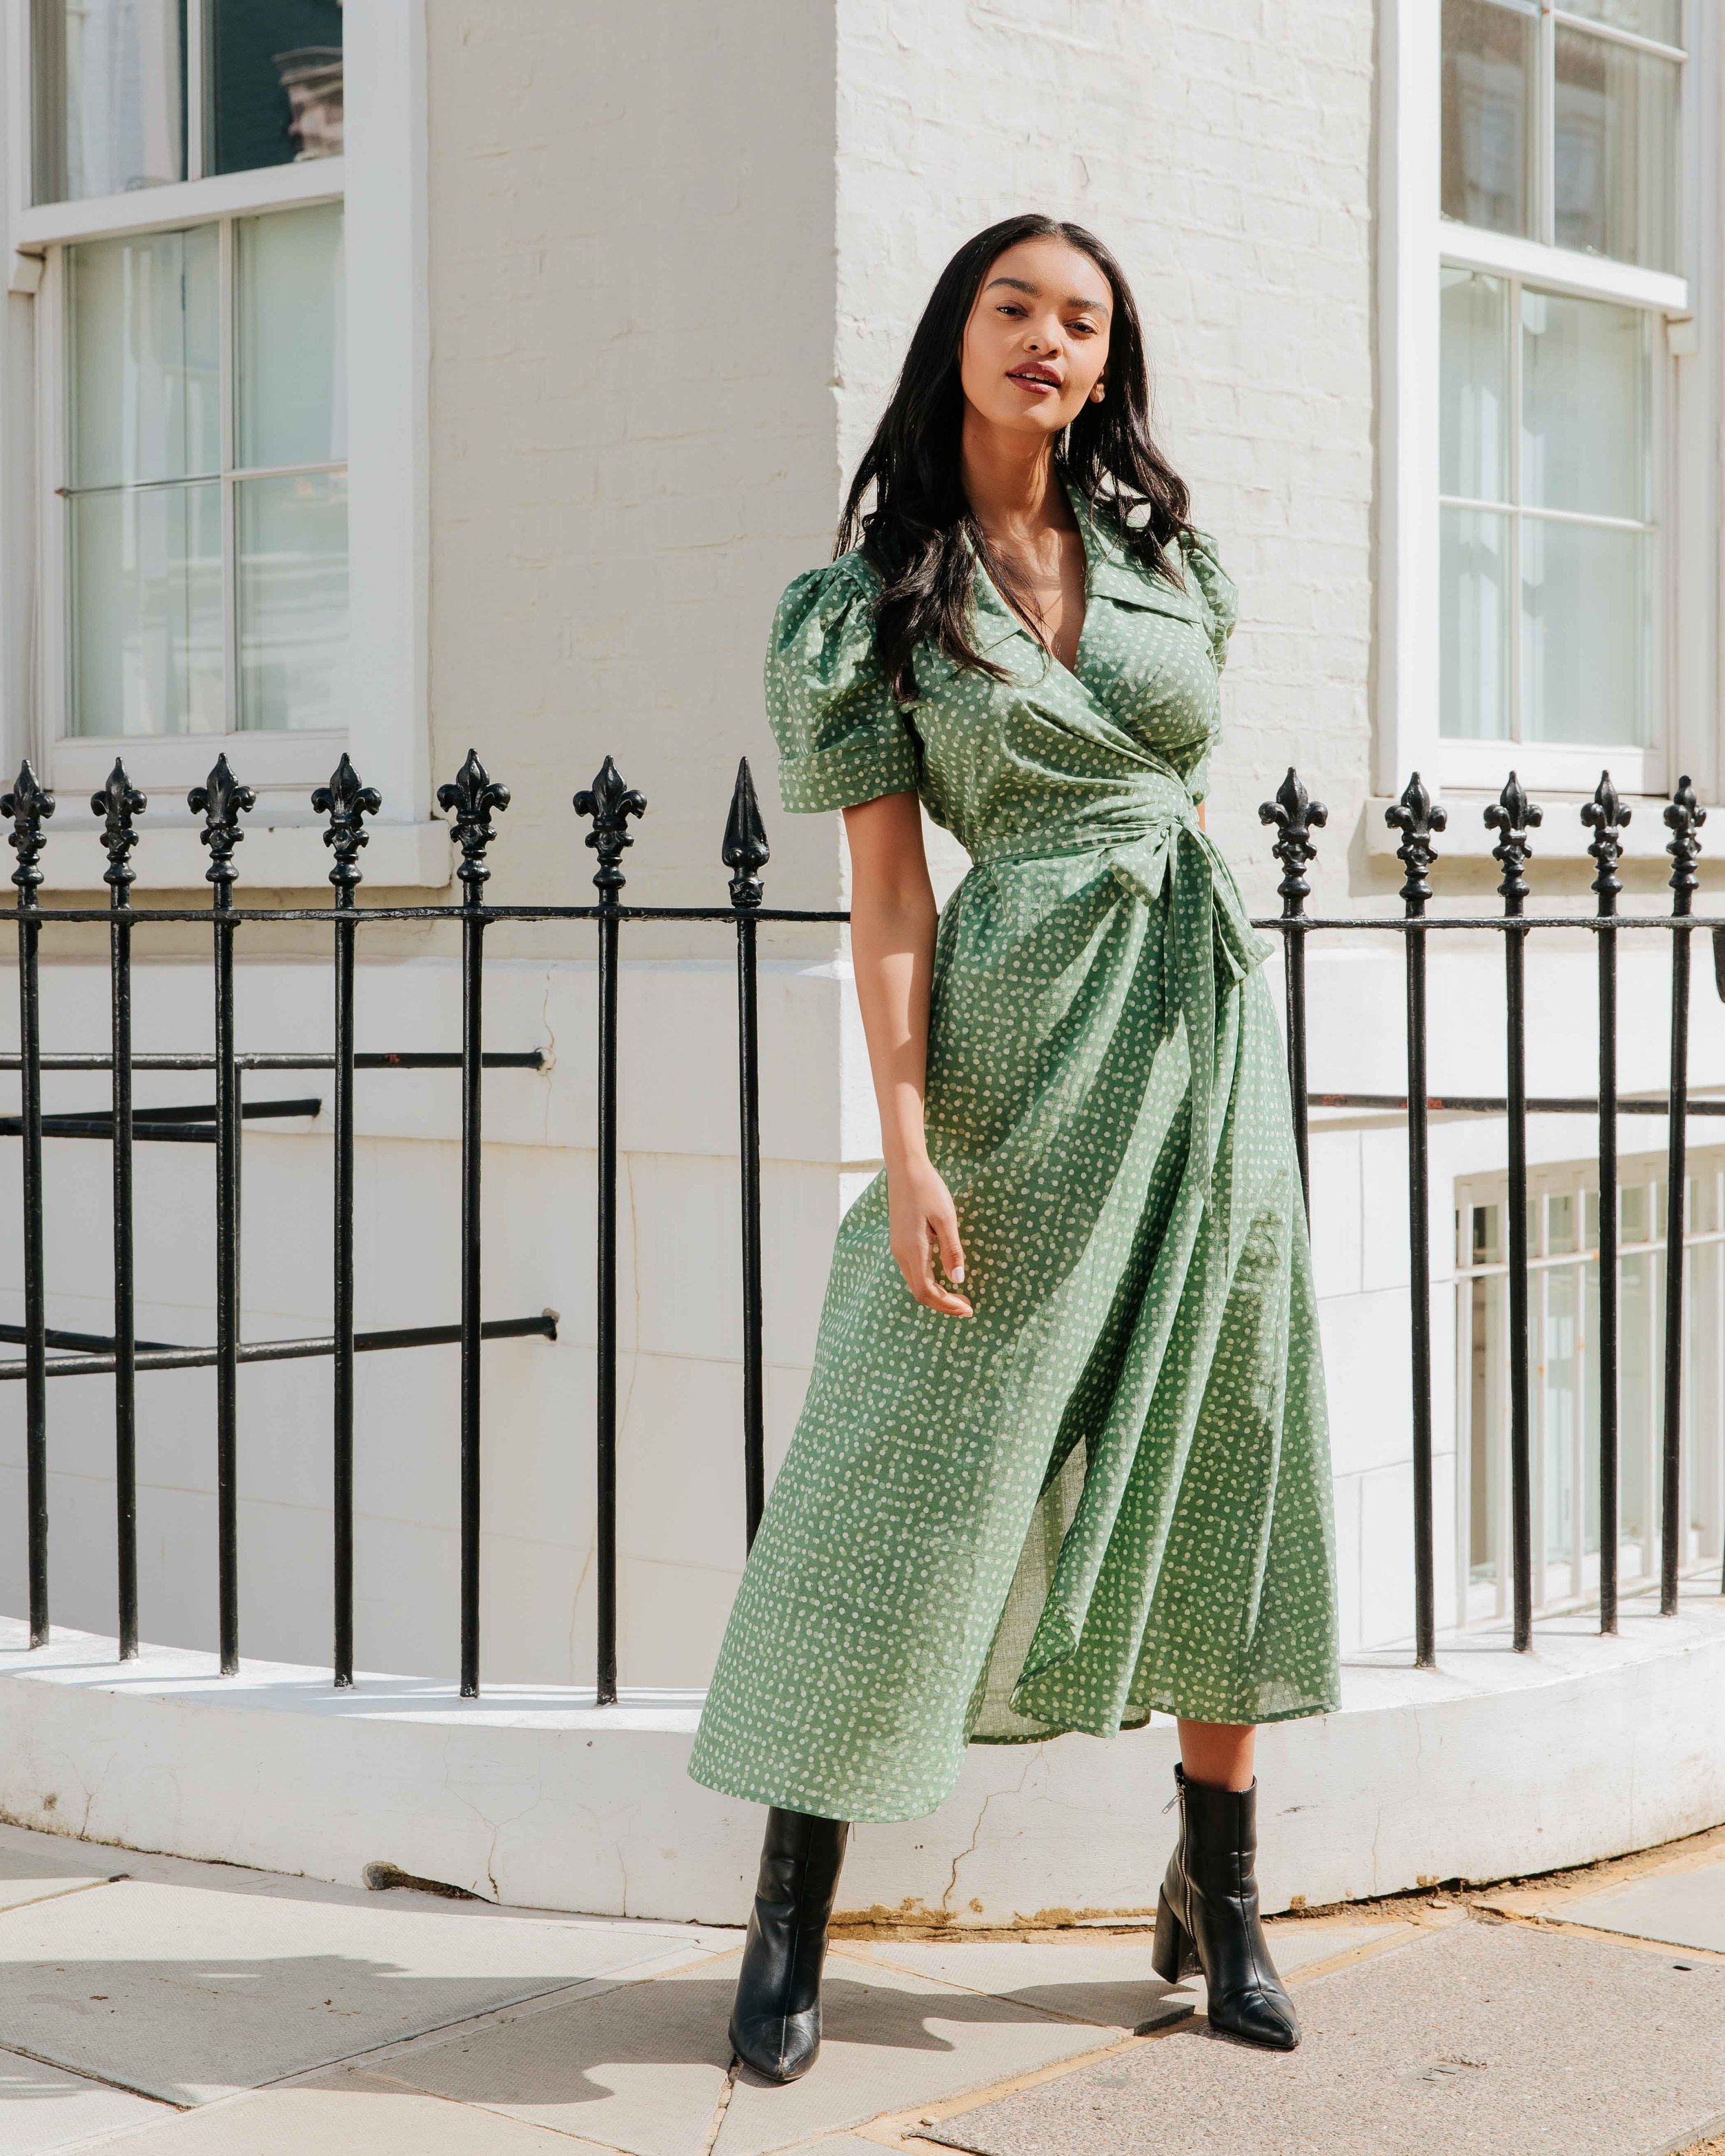 Terre_Amoure_Green_Dress_in_Notting_Hill.jpg